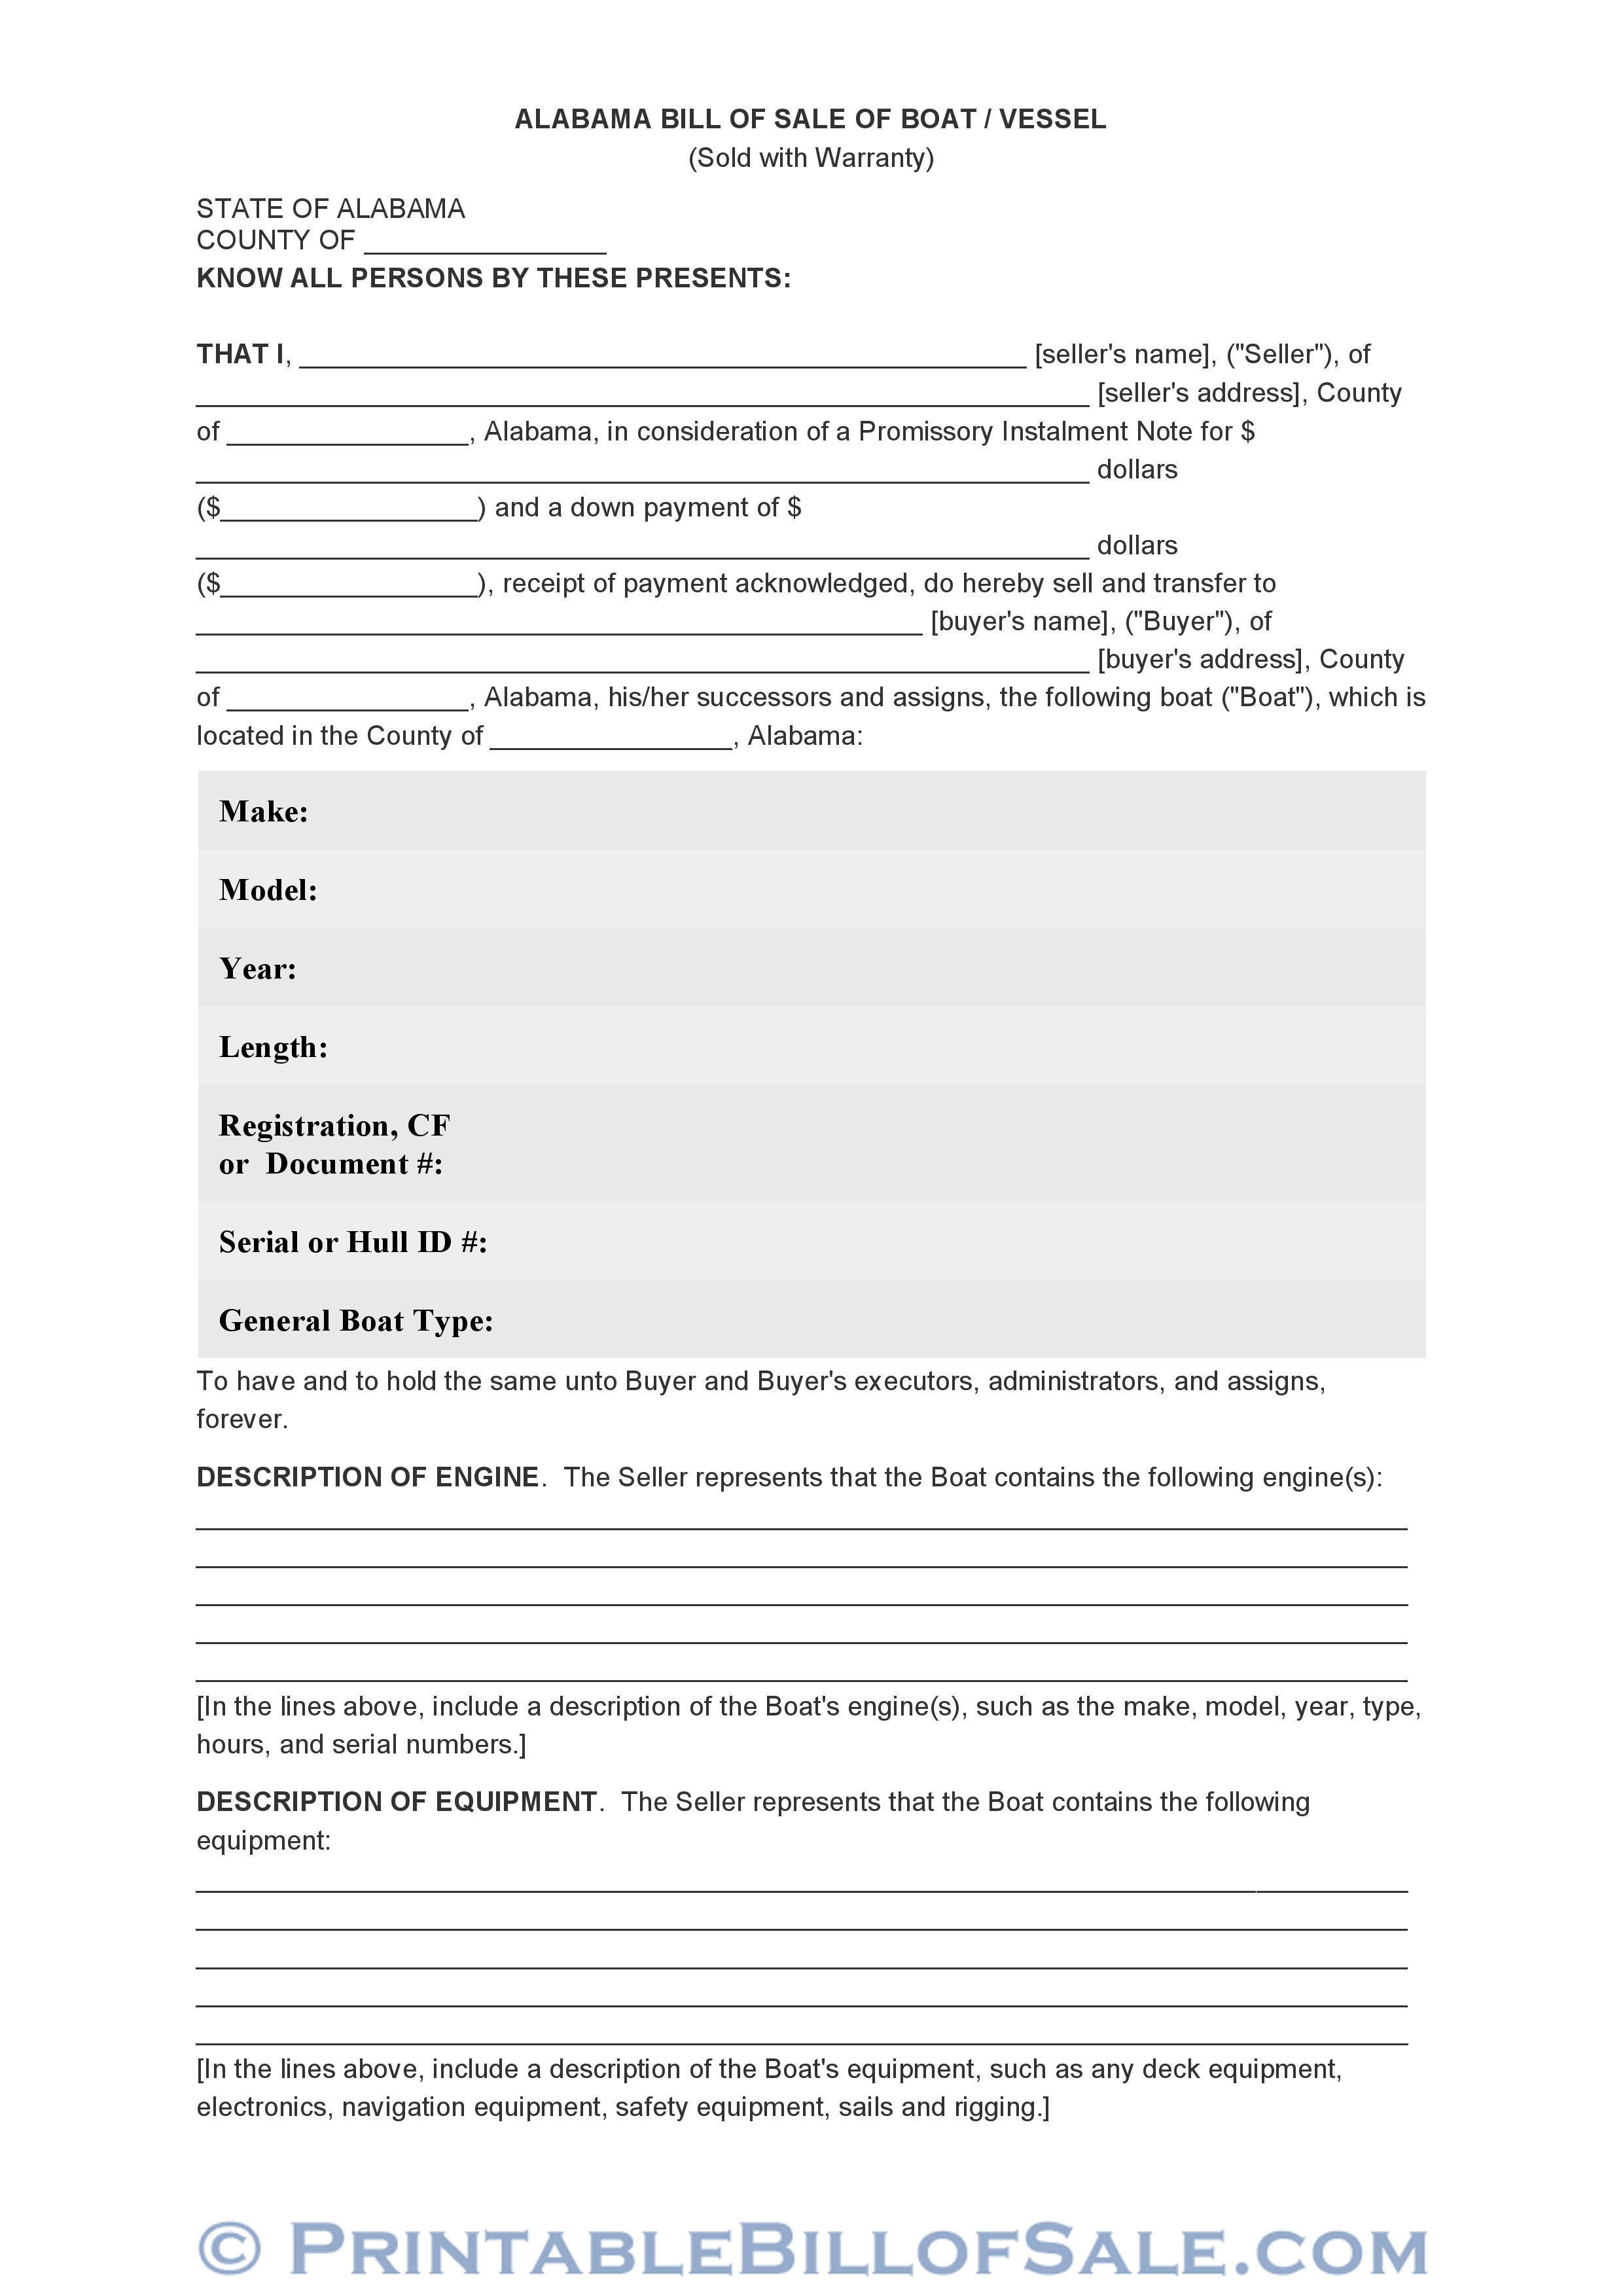 free-alabama-bill-of-sale-of-boat-vessel-form-download-pdf-doc-template